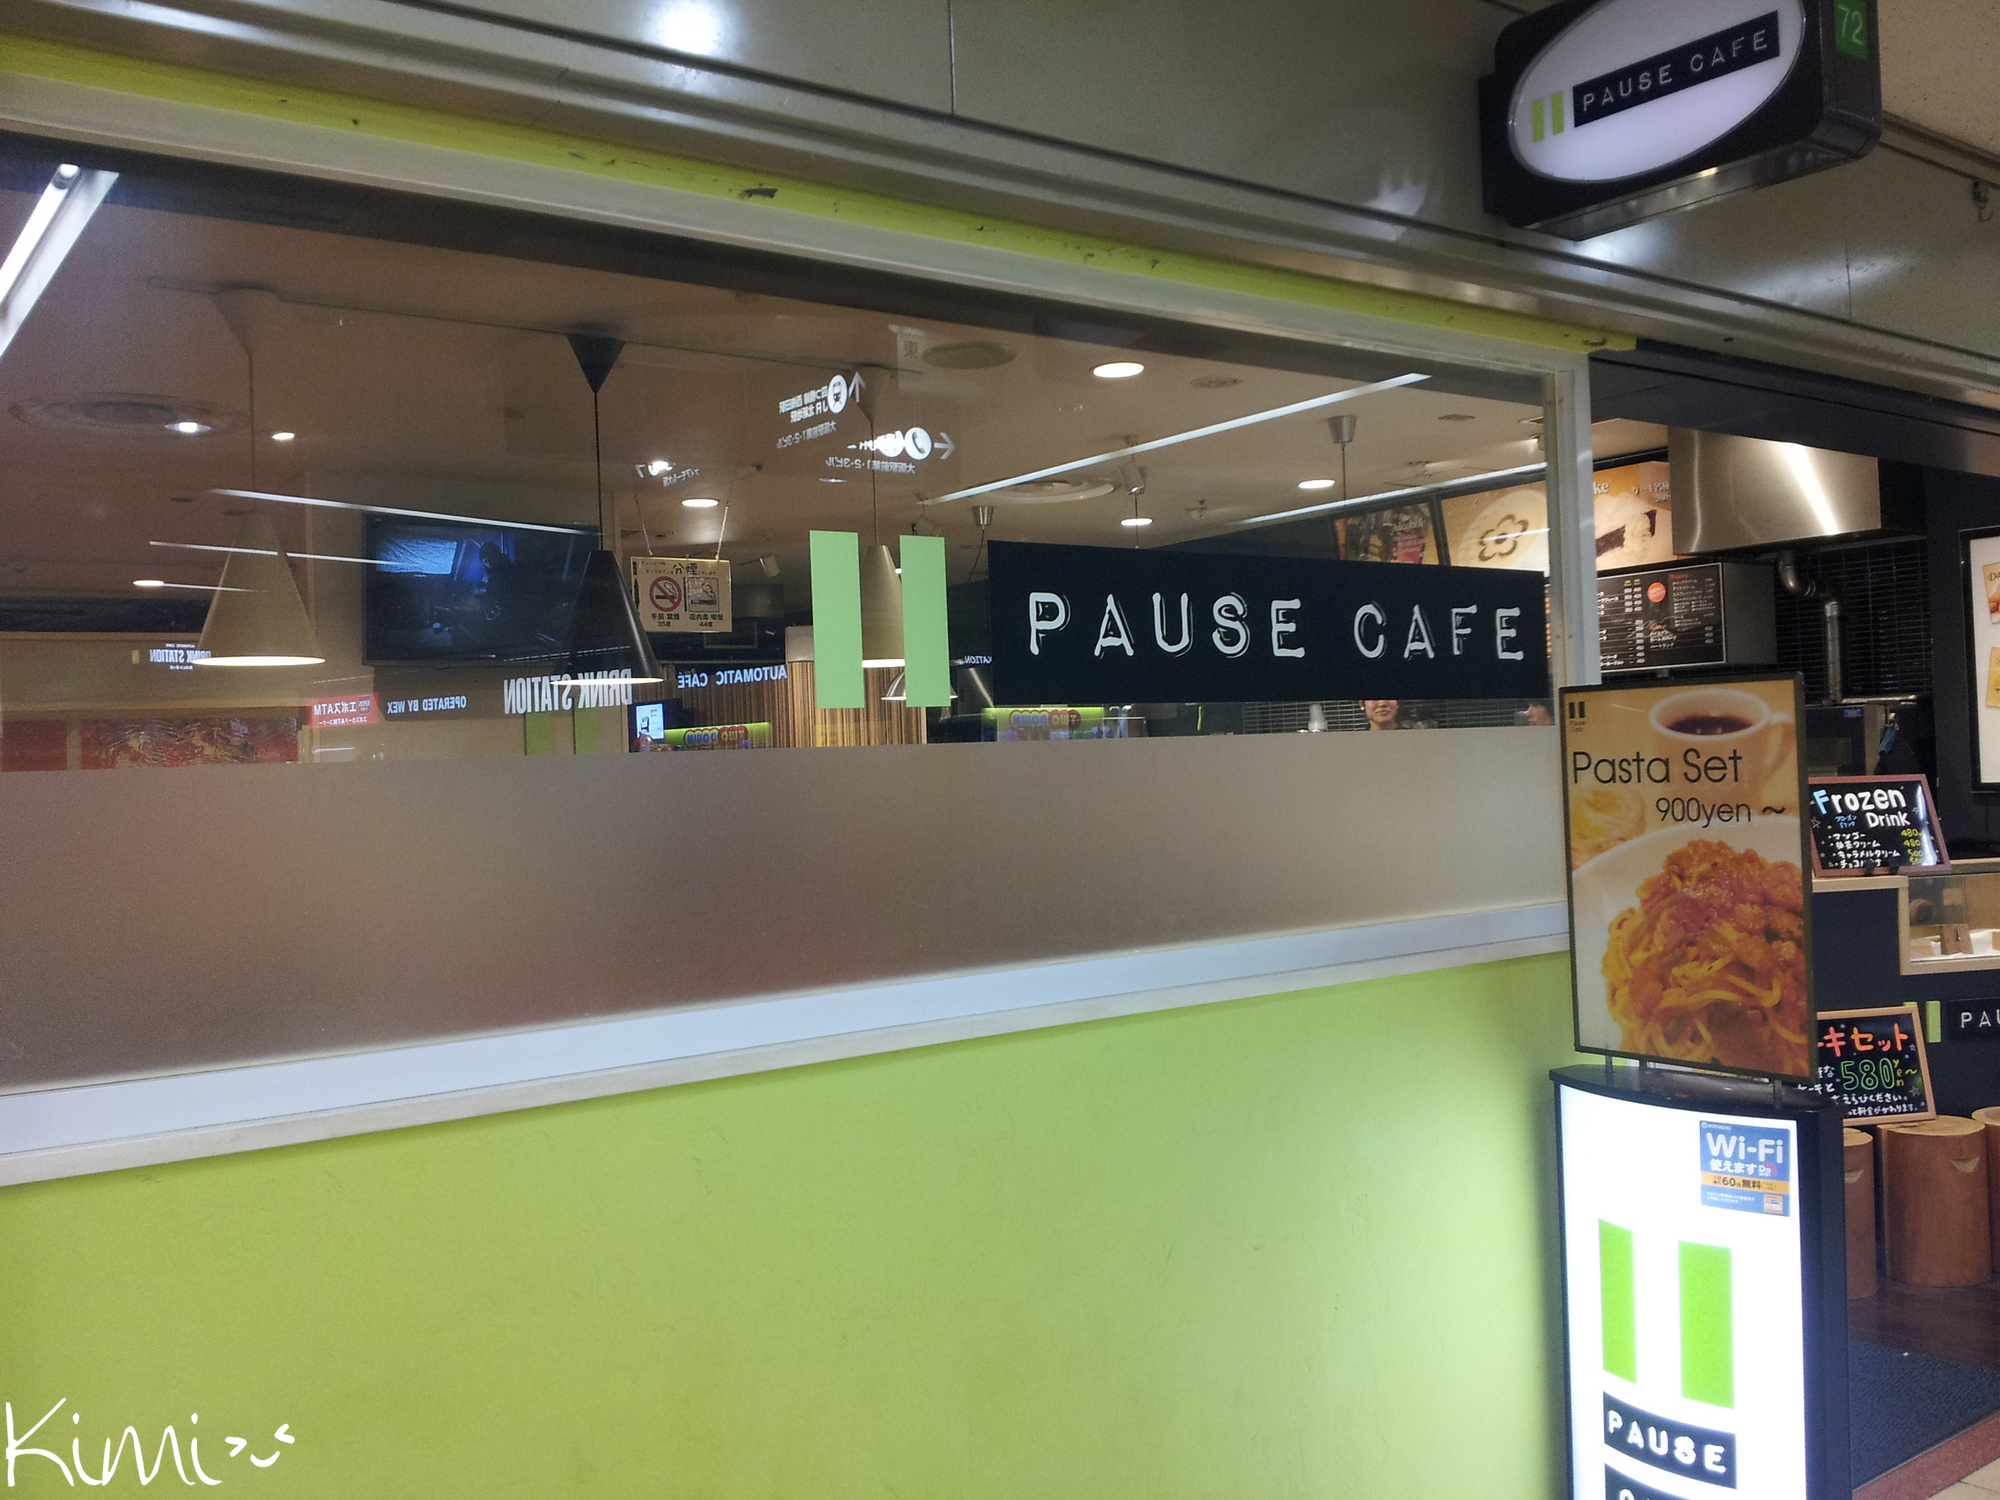 Pause Café, Kyoto